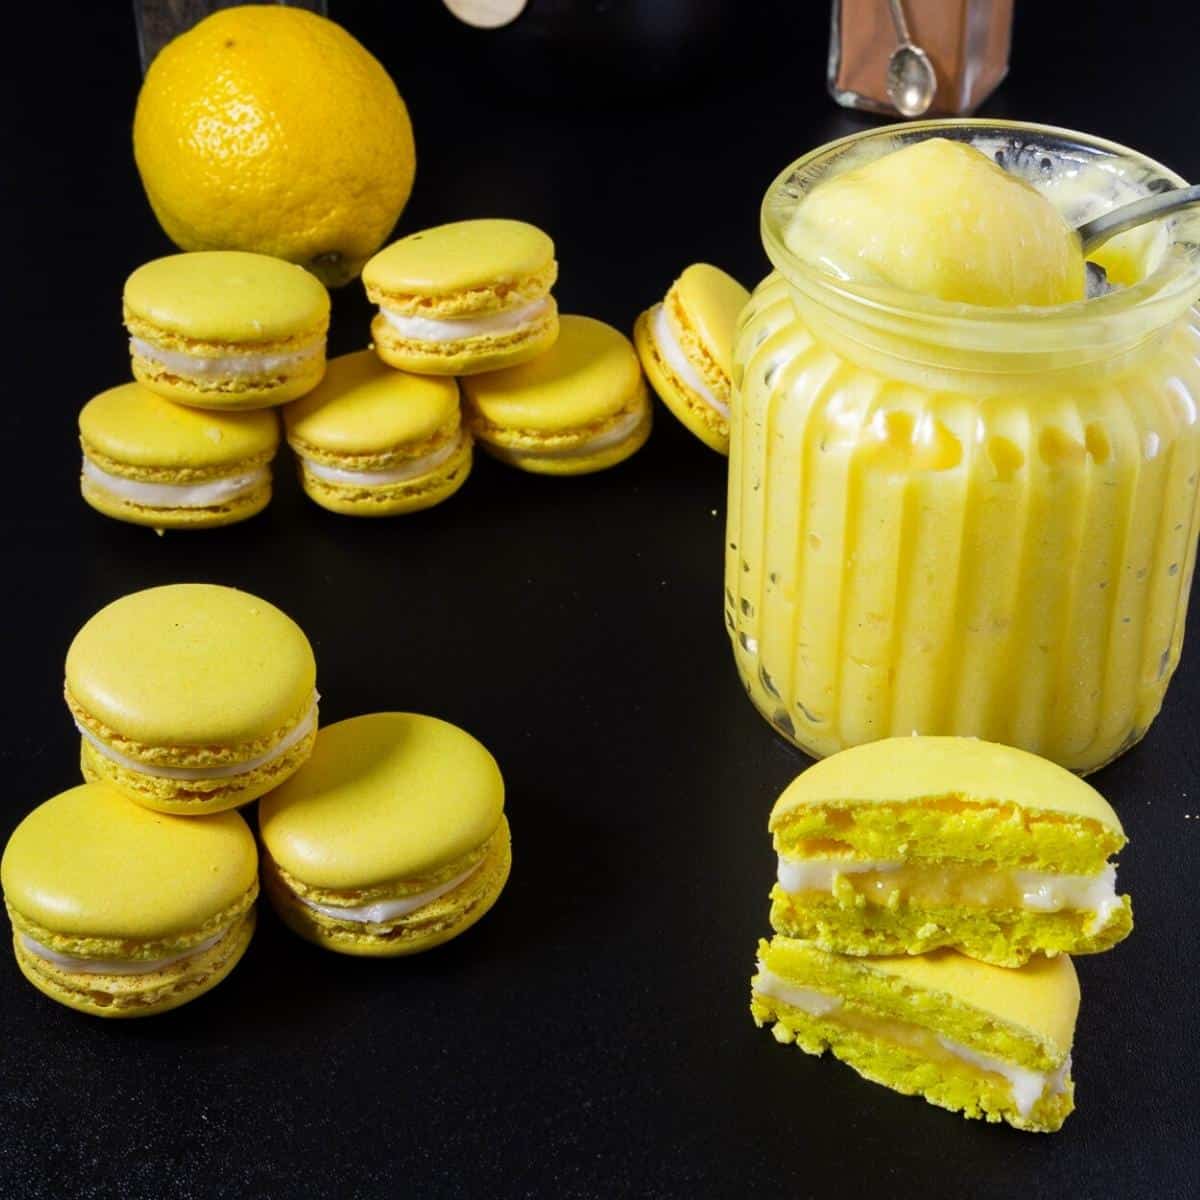 Lemon macarons with lemon curd on the table.